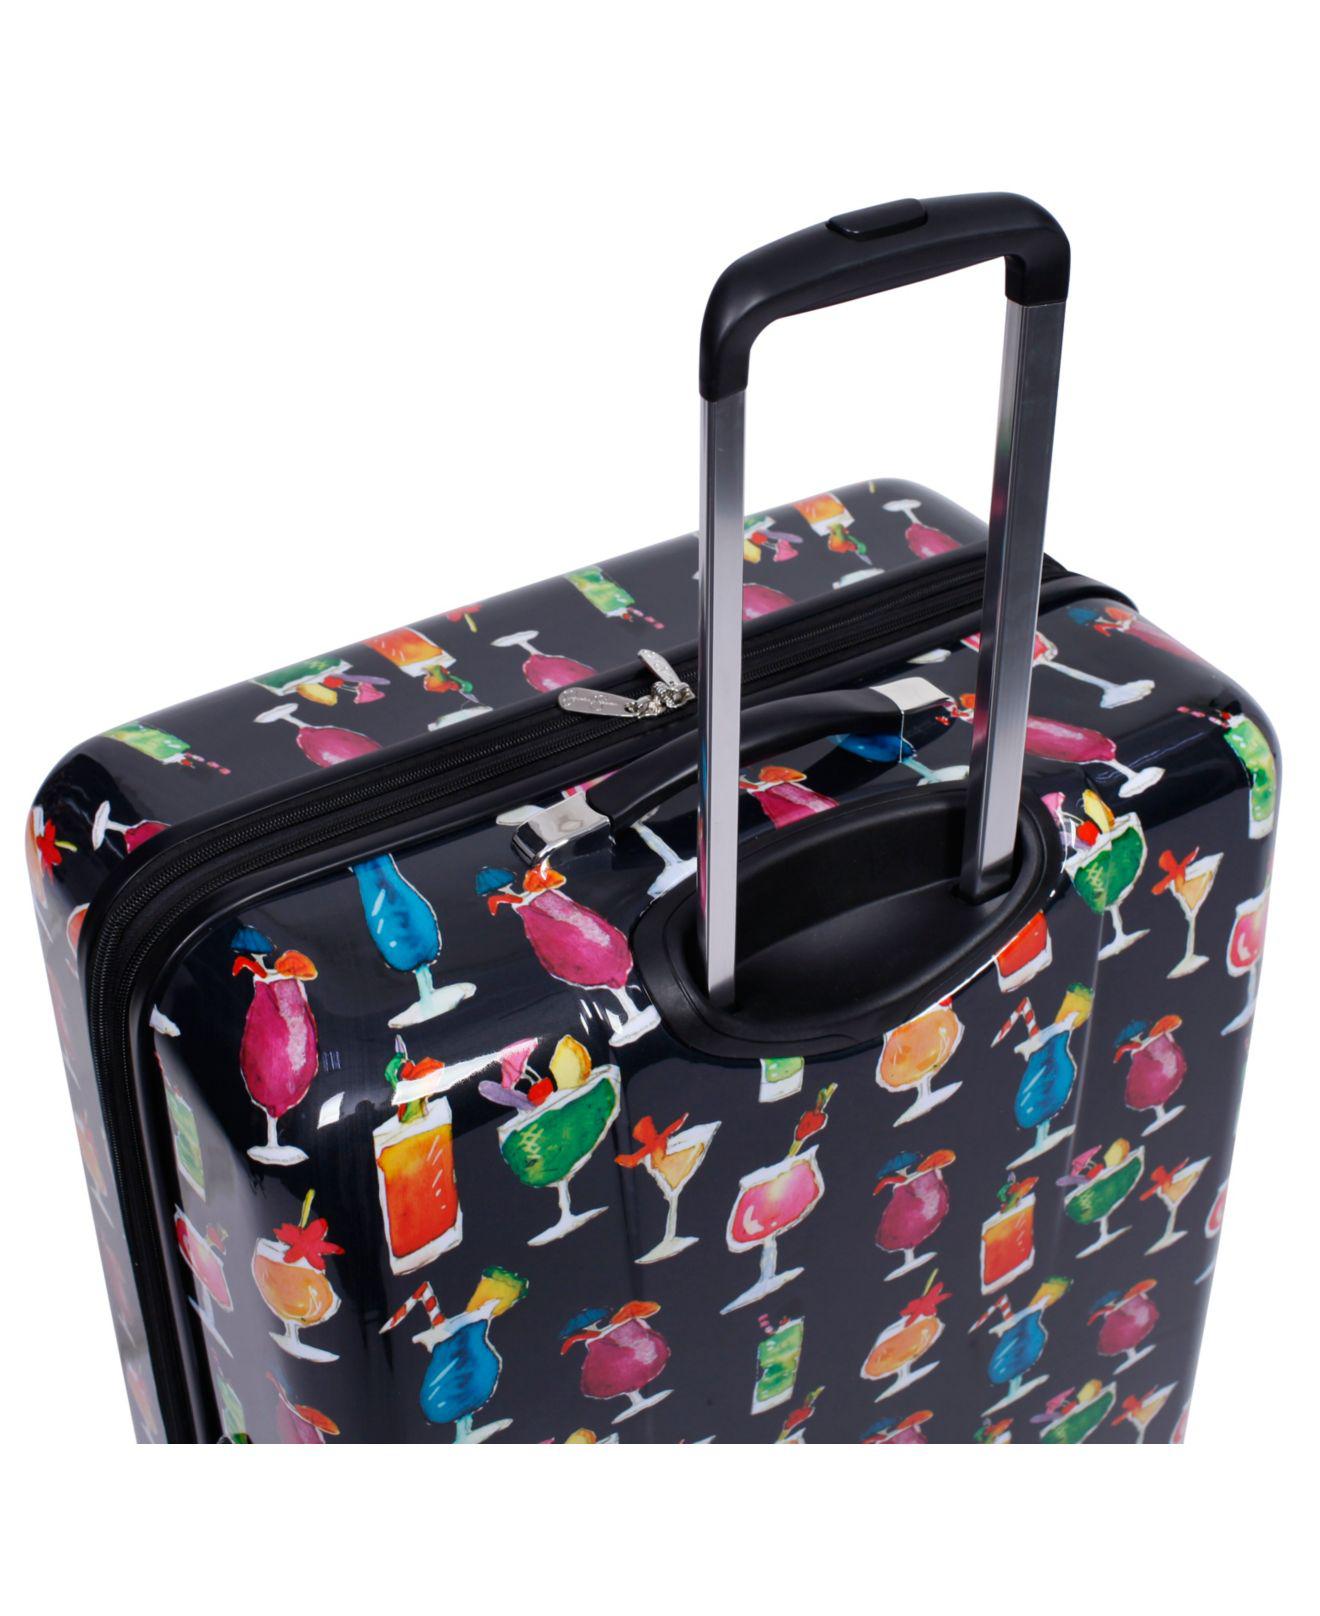 Jessica Simpson Travel bags Jessica Simpson Luggage $113.99 